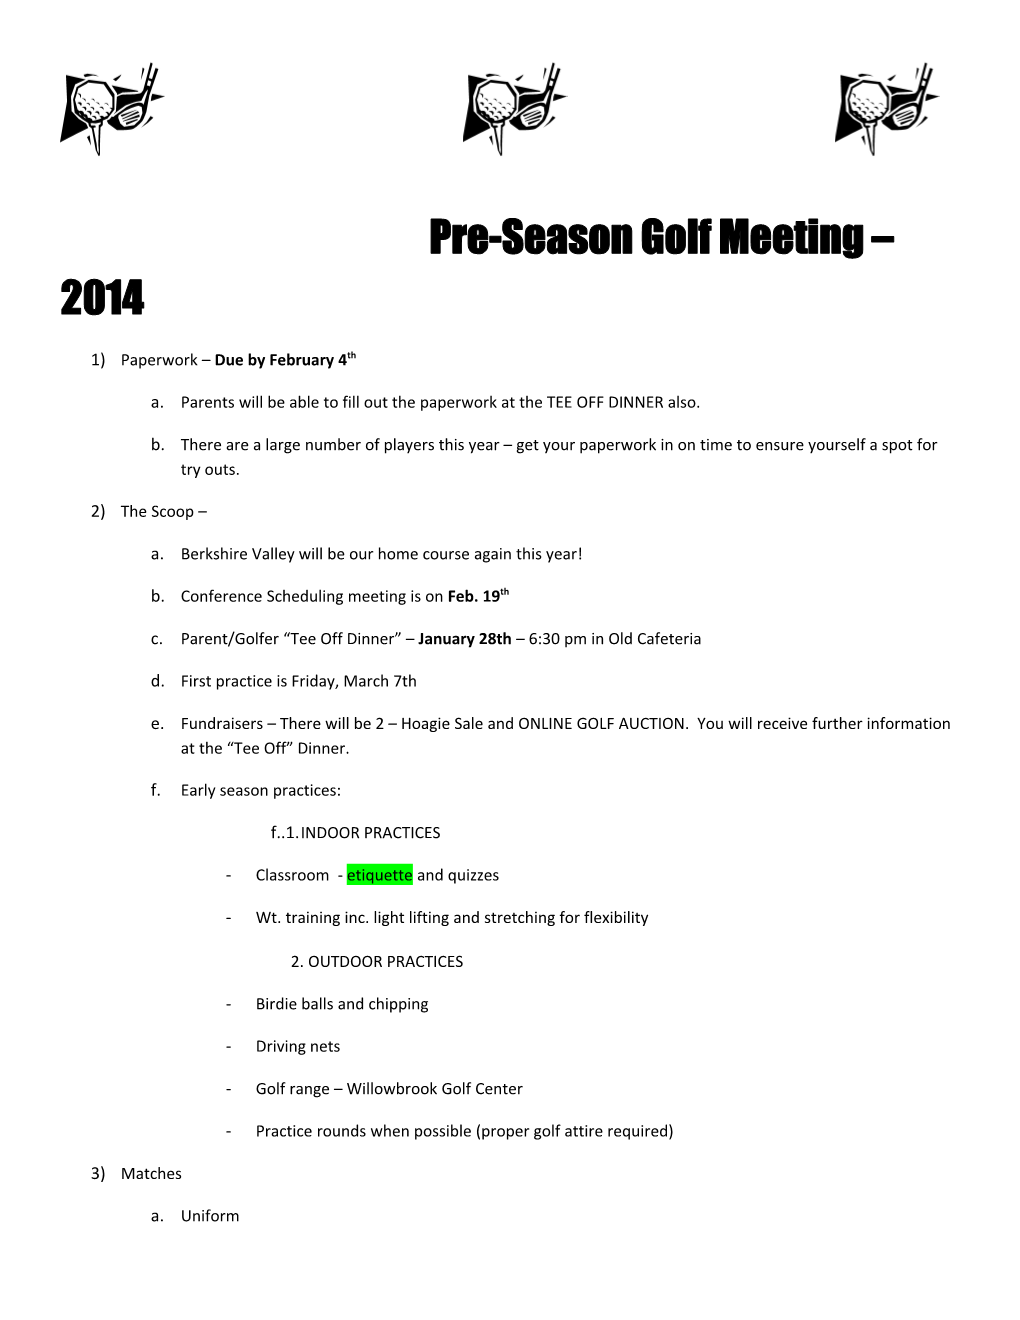 Pre-Season Golf Meeting 2014